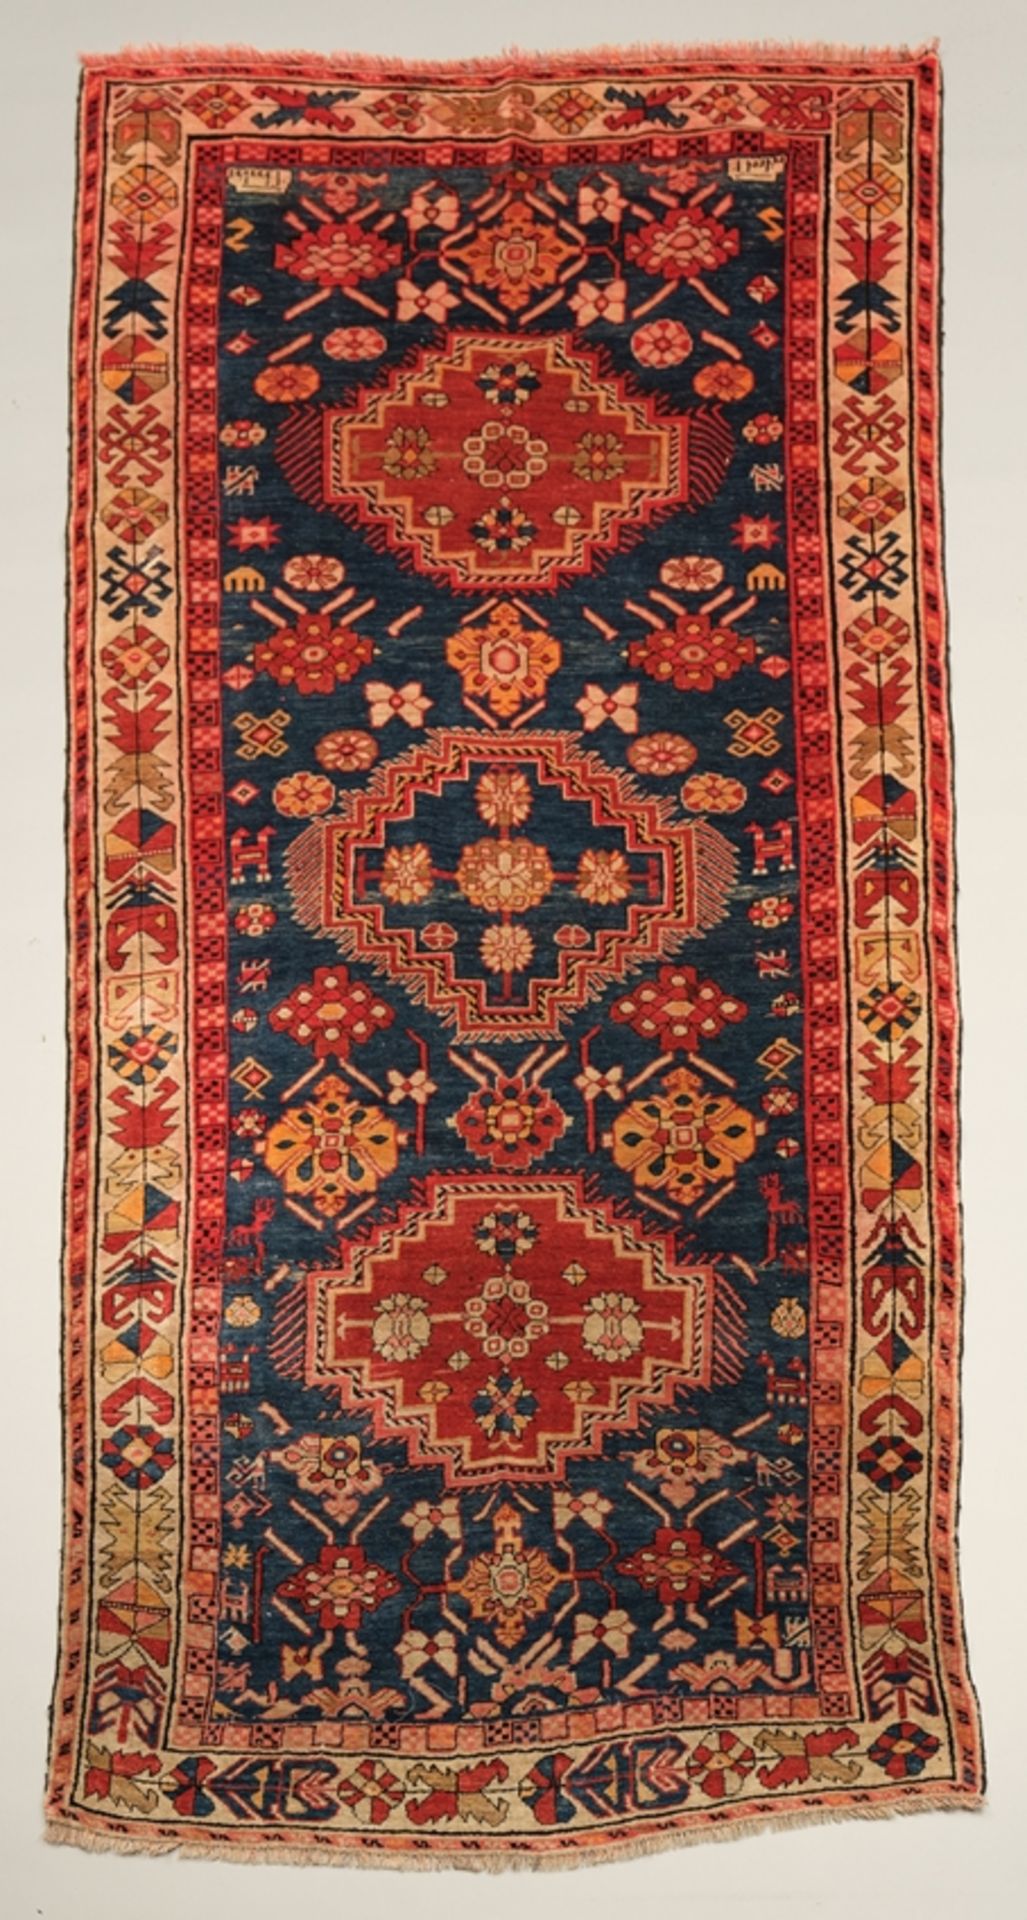 Kasak-Galerie, Kaukasus, antik, Pflanzenfarben, datiert 1331 (1913), ca. 3.02 x 1.50 m